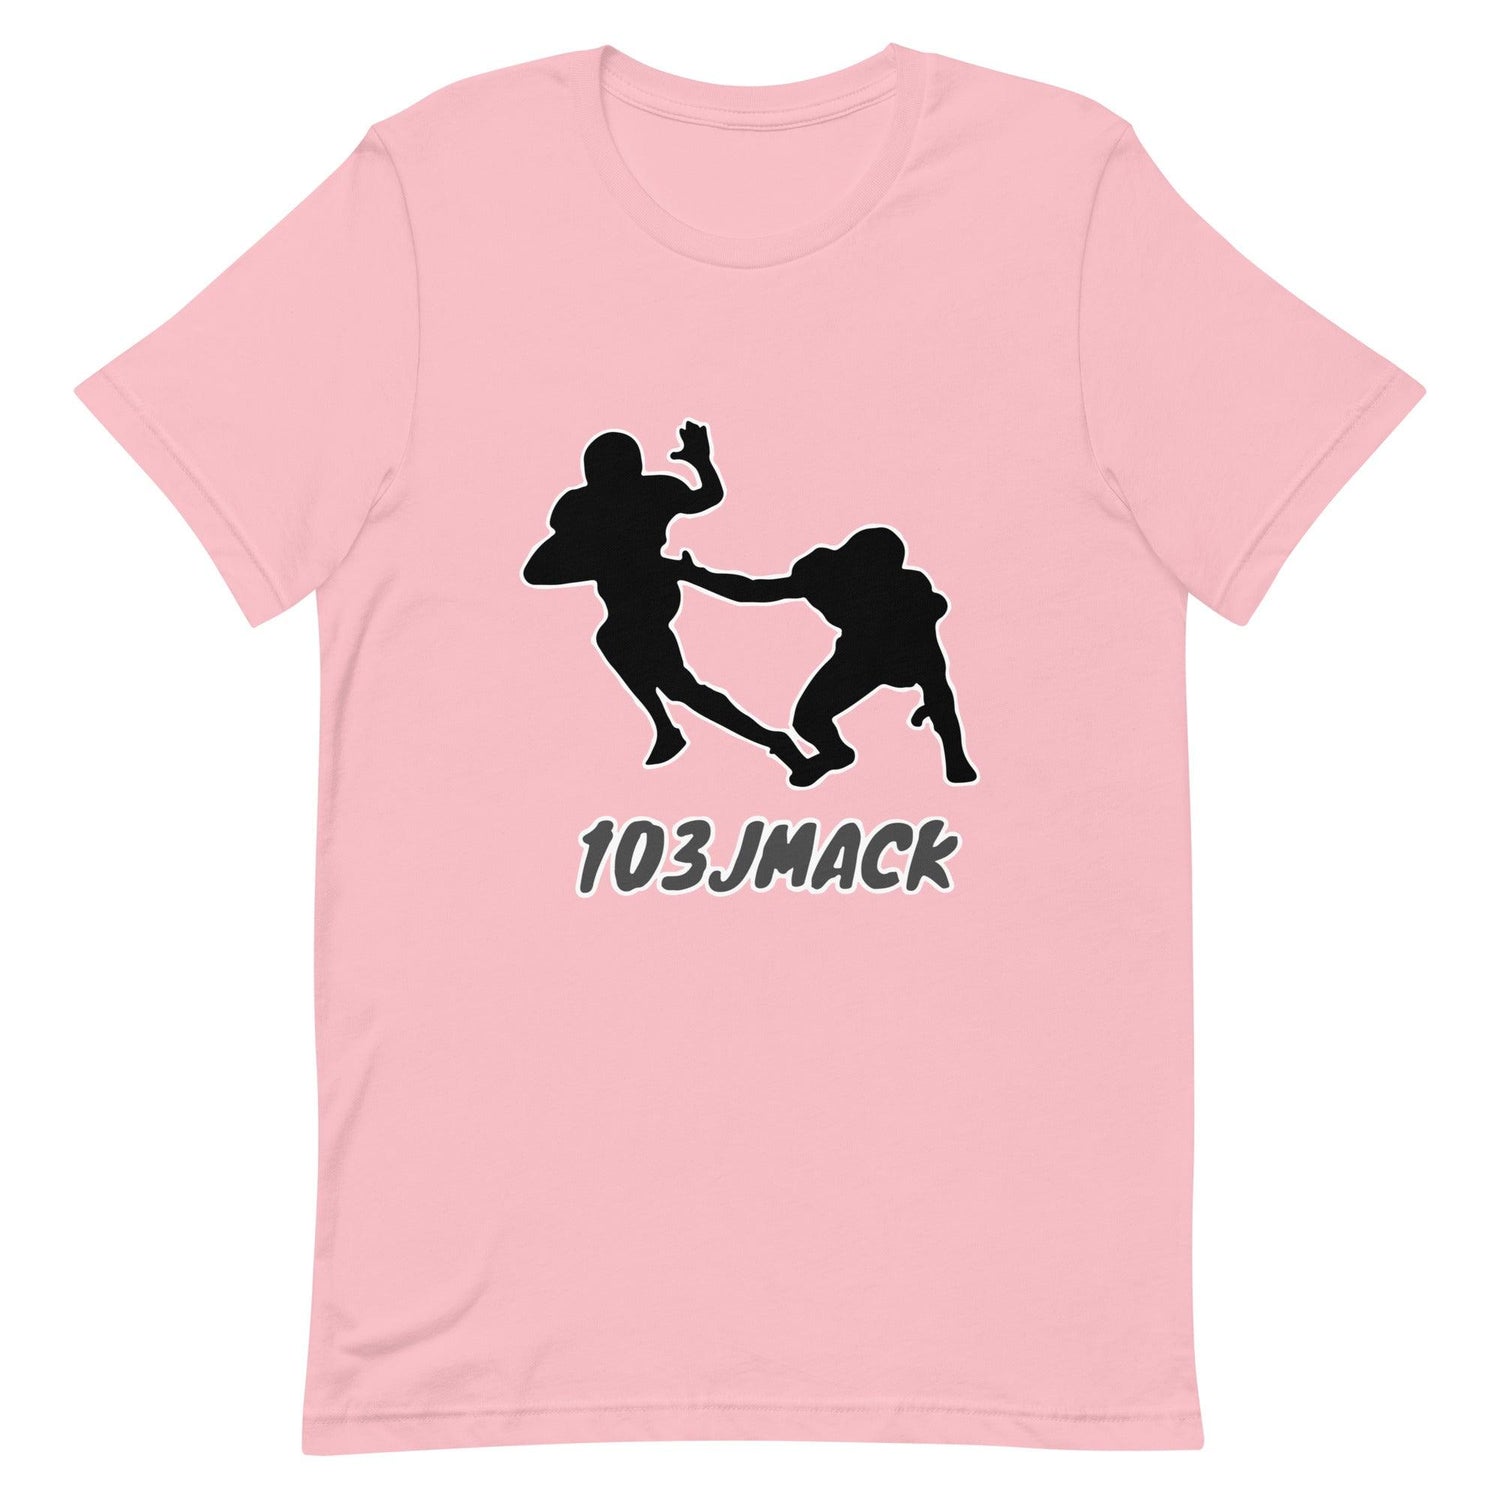 Jaylin Mack "Essential" t-shirt - Fan Arch